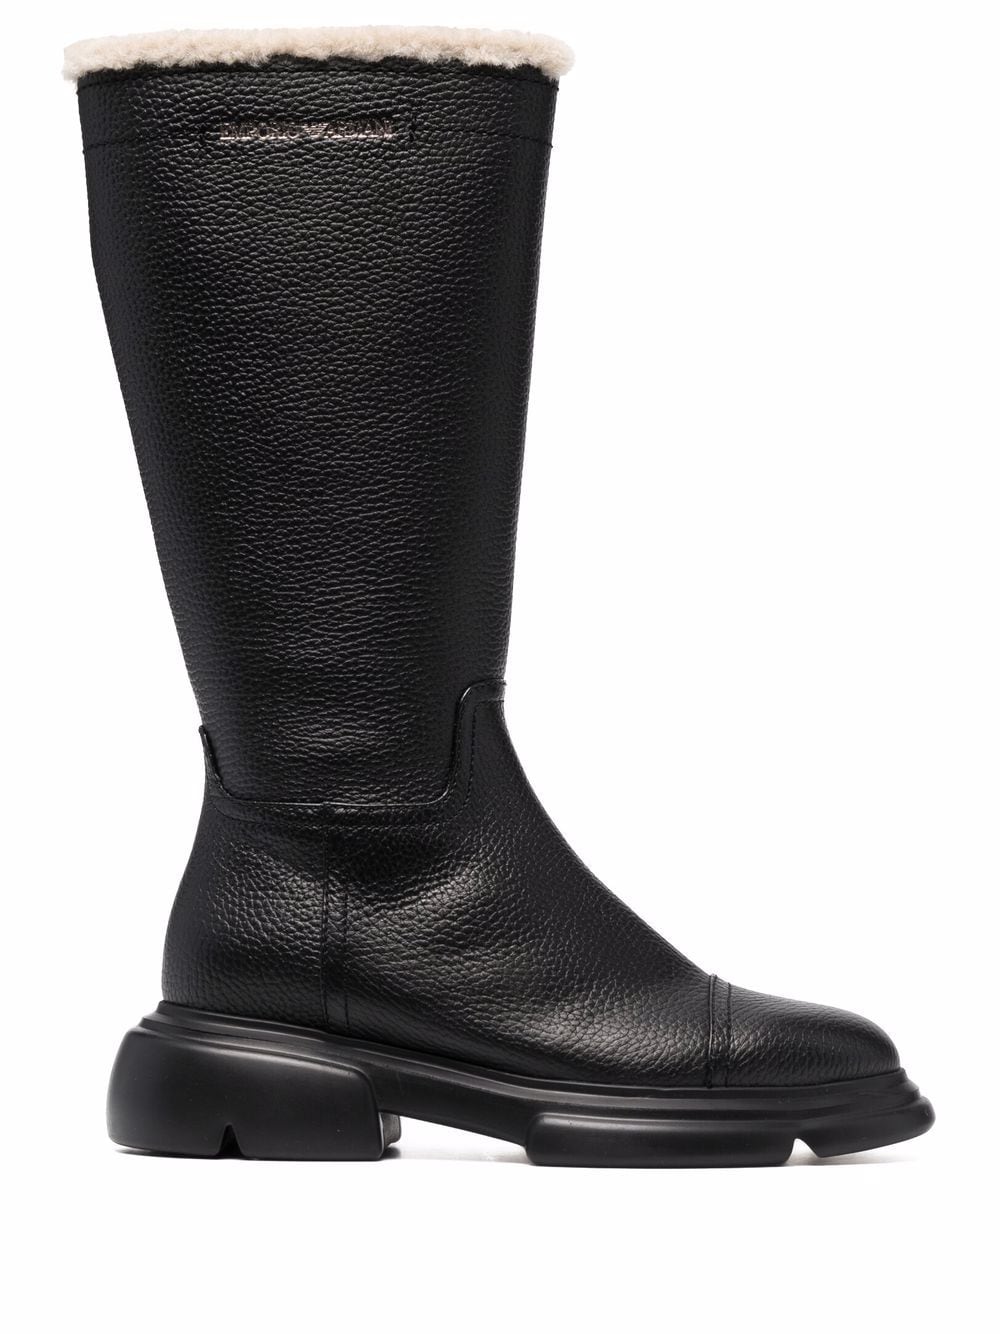 Emporio Armani Pebbled Leather Boots - Farfetch